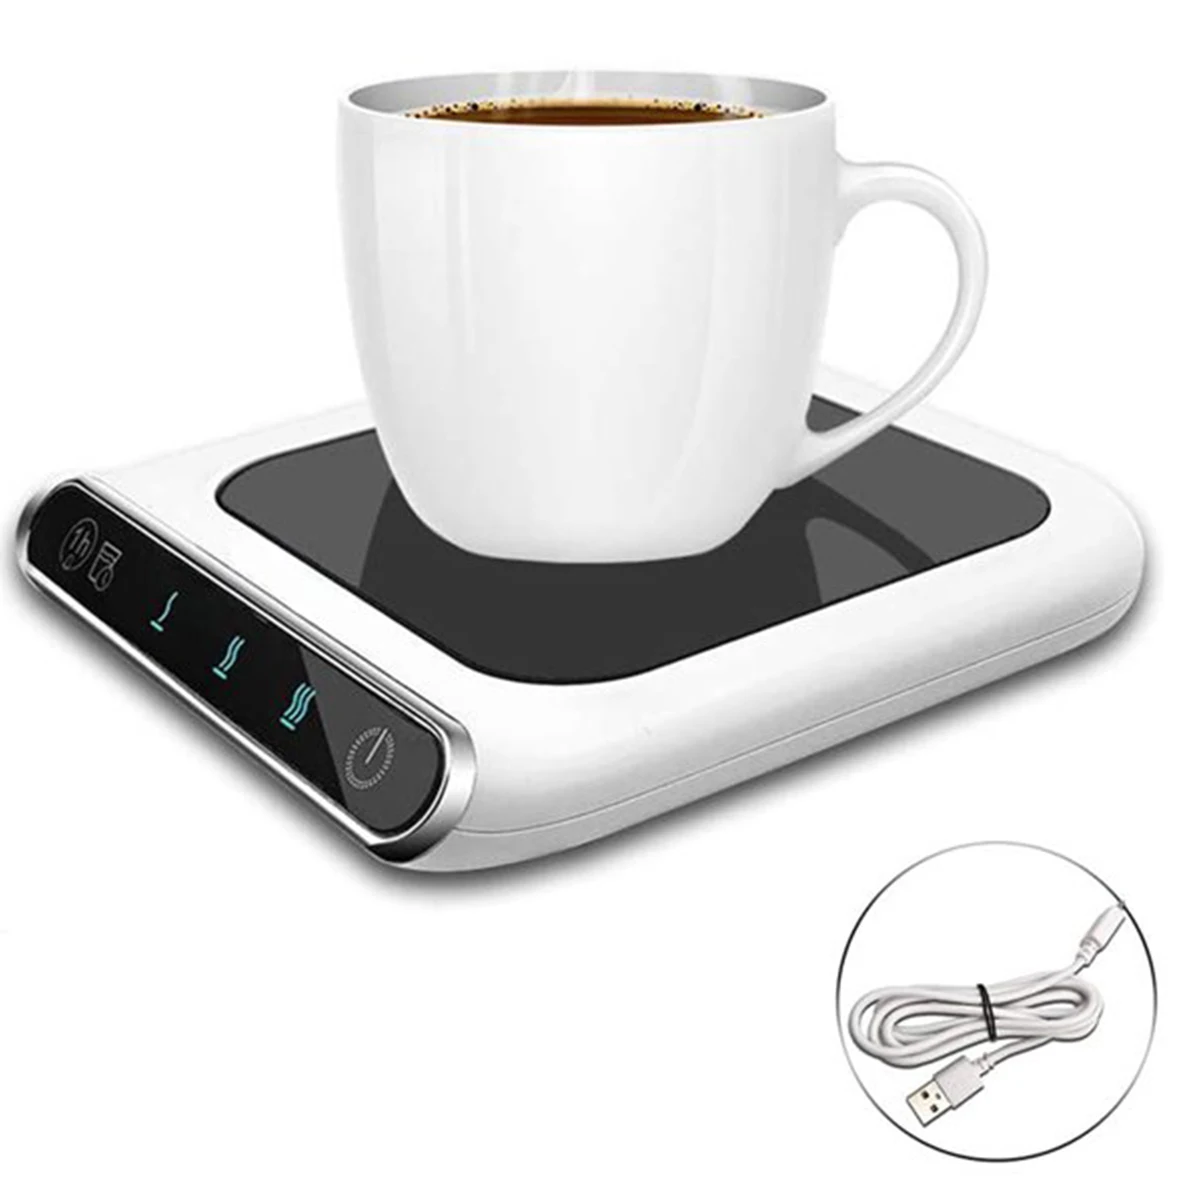 https://ae01.alicdn.com/kf/Sdd26912123af4ae69f40b9469f2dc394W/Coffee-Mug-Warmer-Electric-Coffee-Cup-Pad-With-3-Gears-Heating-Temperature-Settings-Milk-Water-Tea.jpg